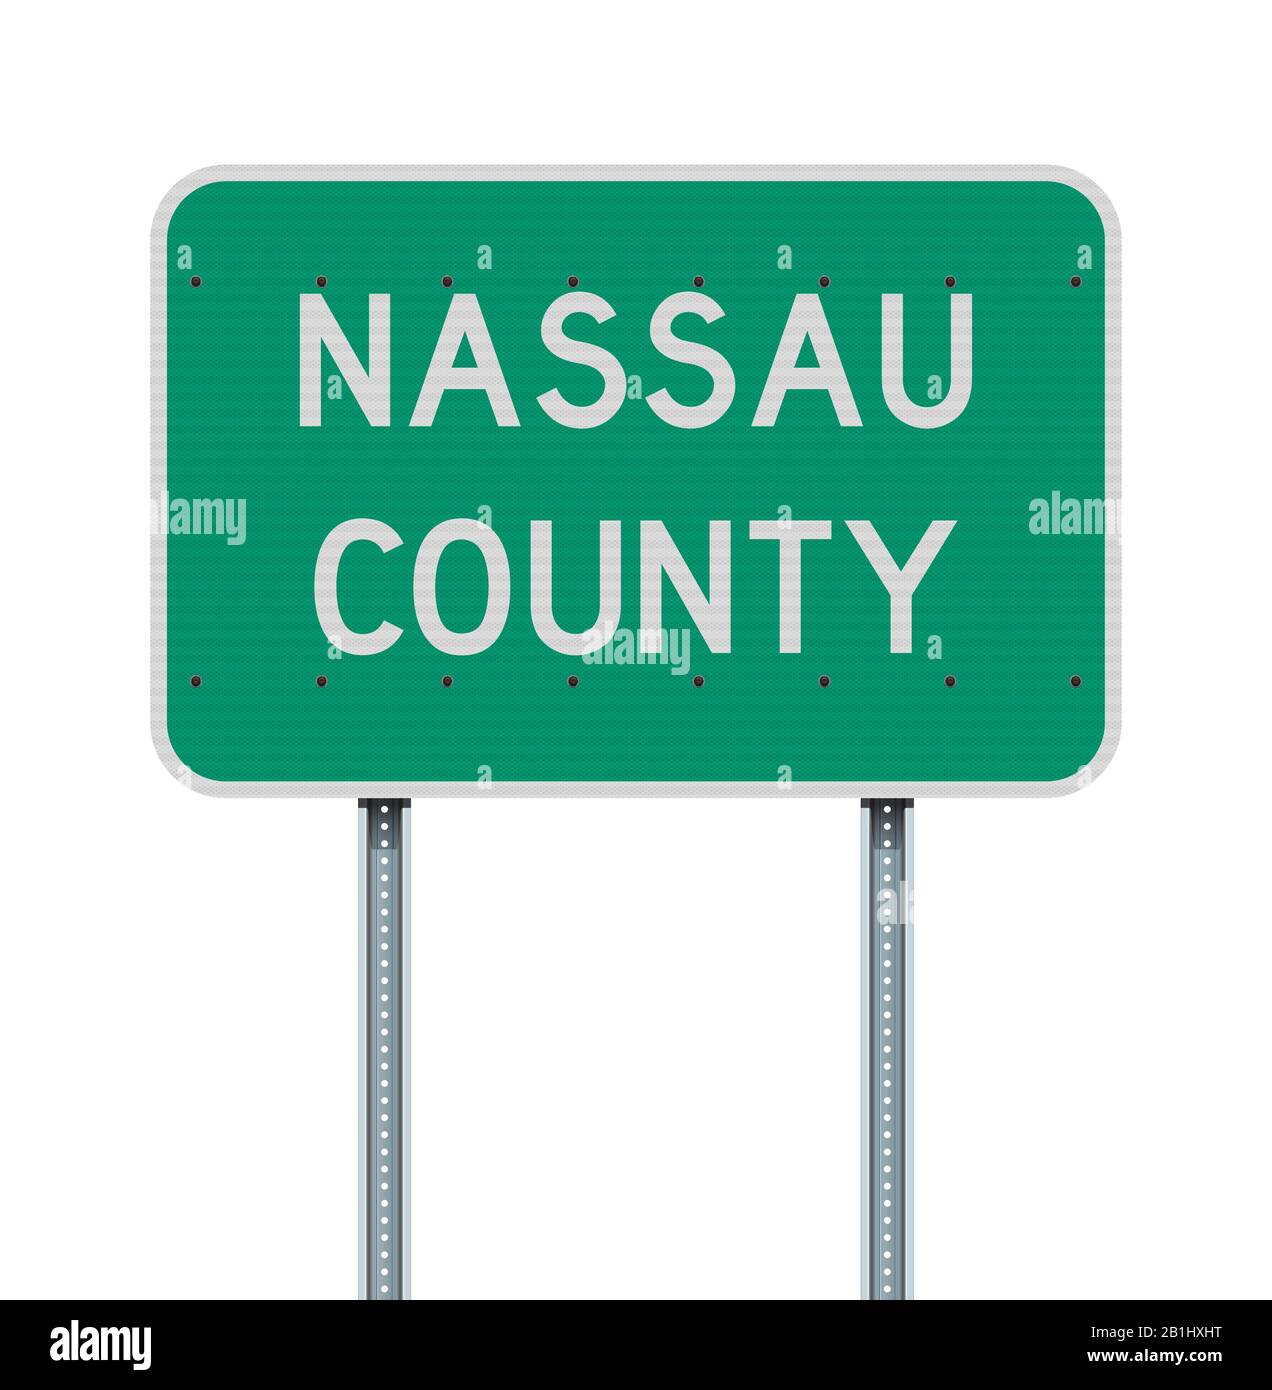 Vector illustration of the Nassau County green road sign on metallic pole Stock Vector